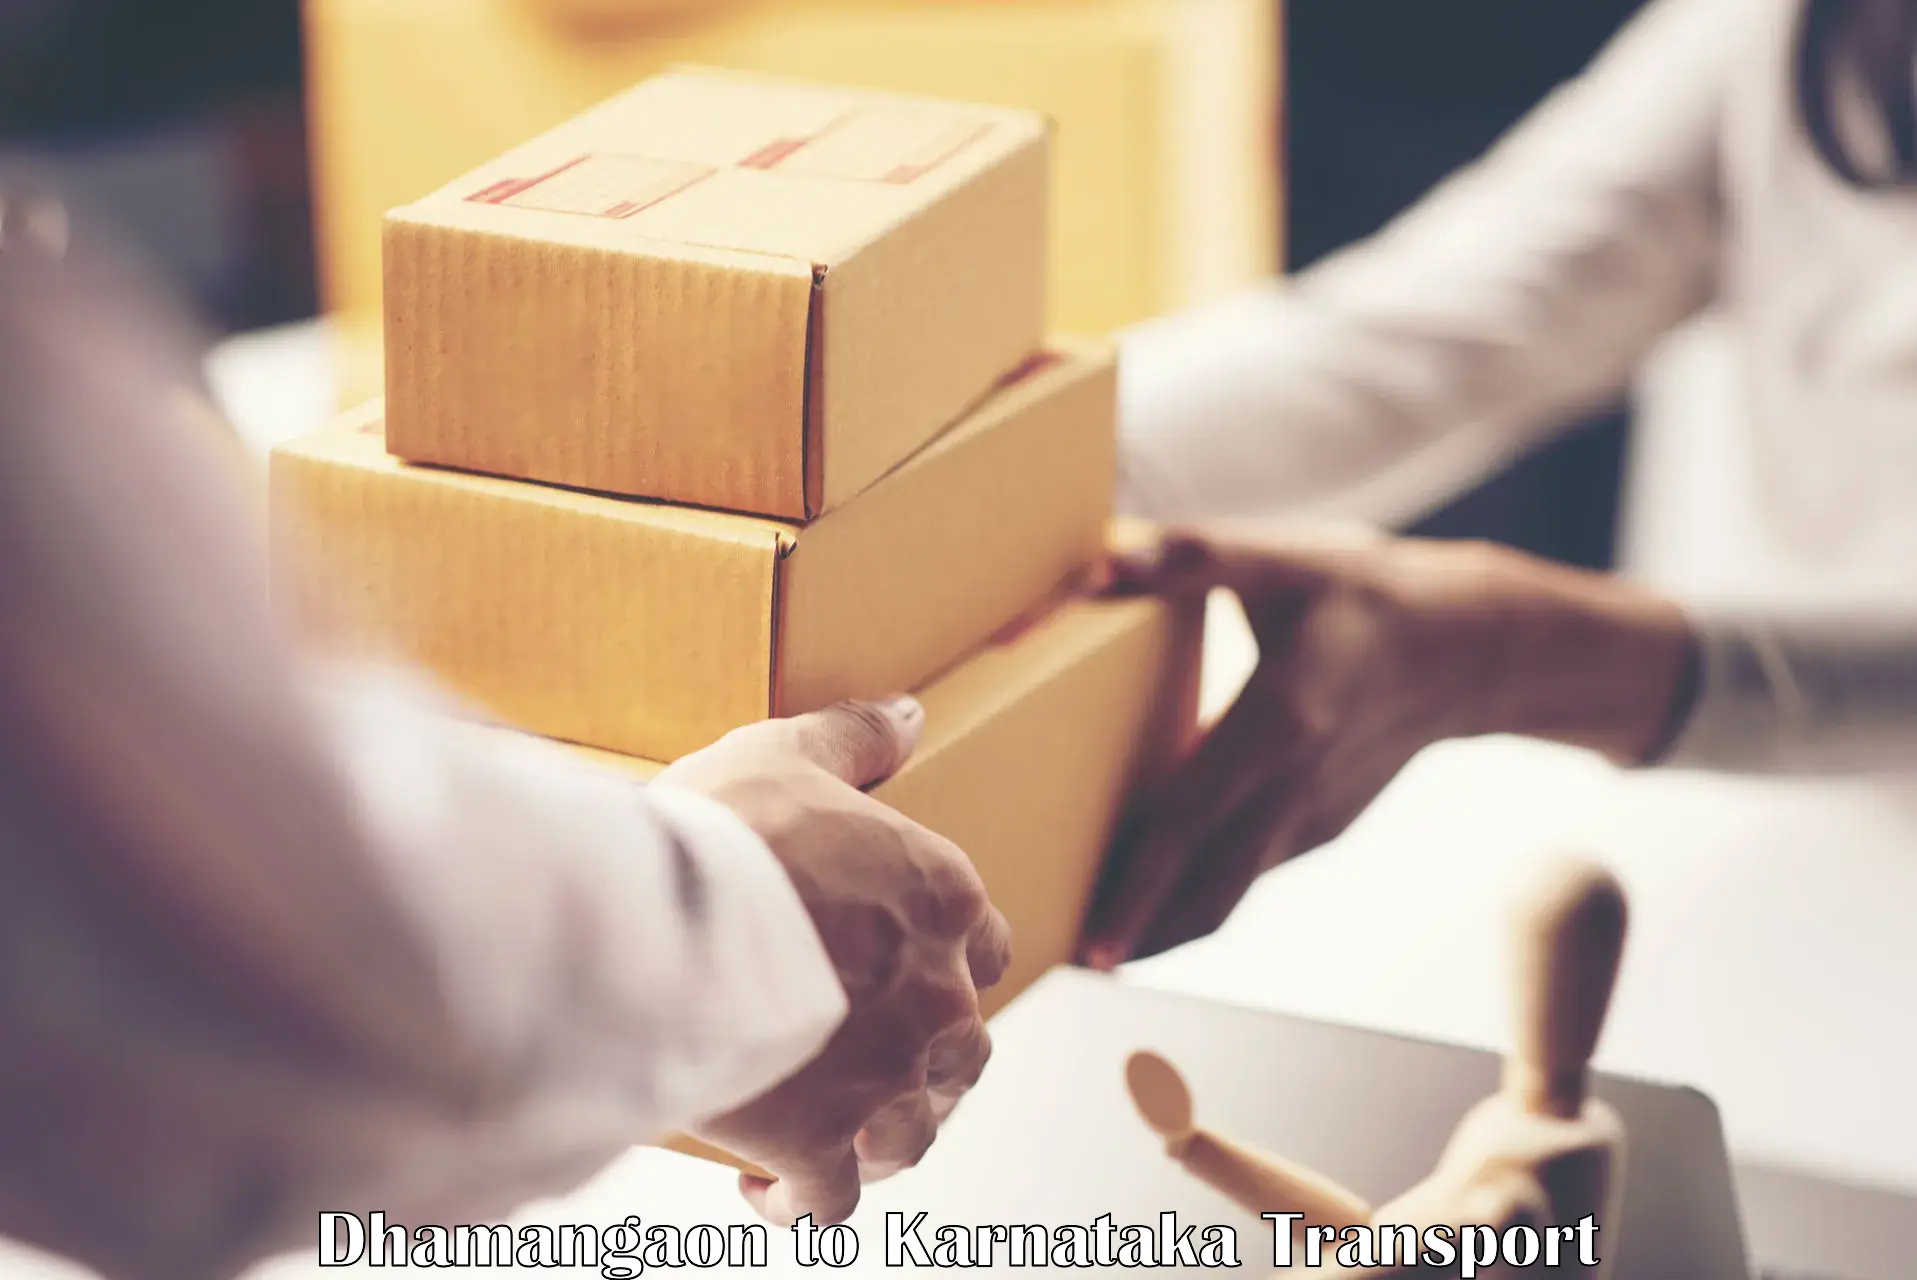 Shipping partner Dhamangaon to Hubli